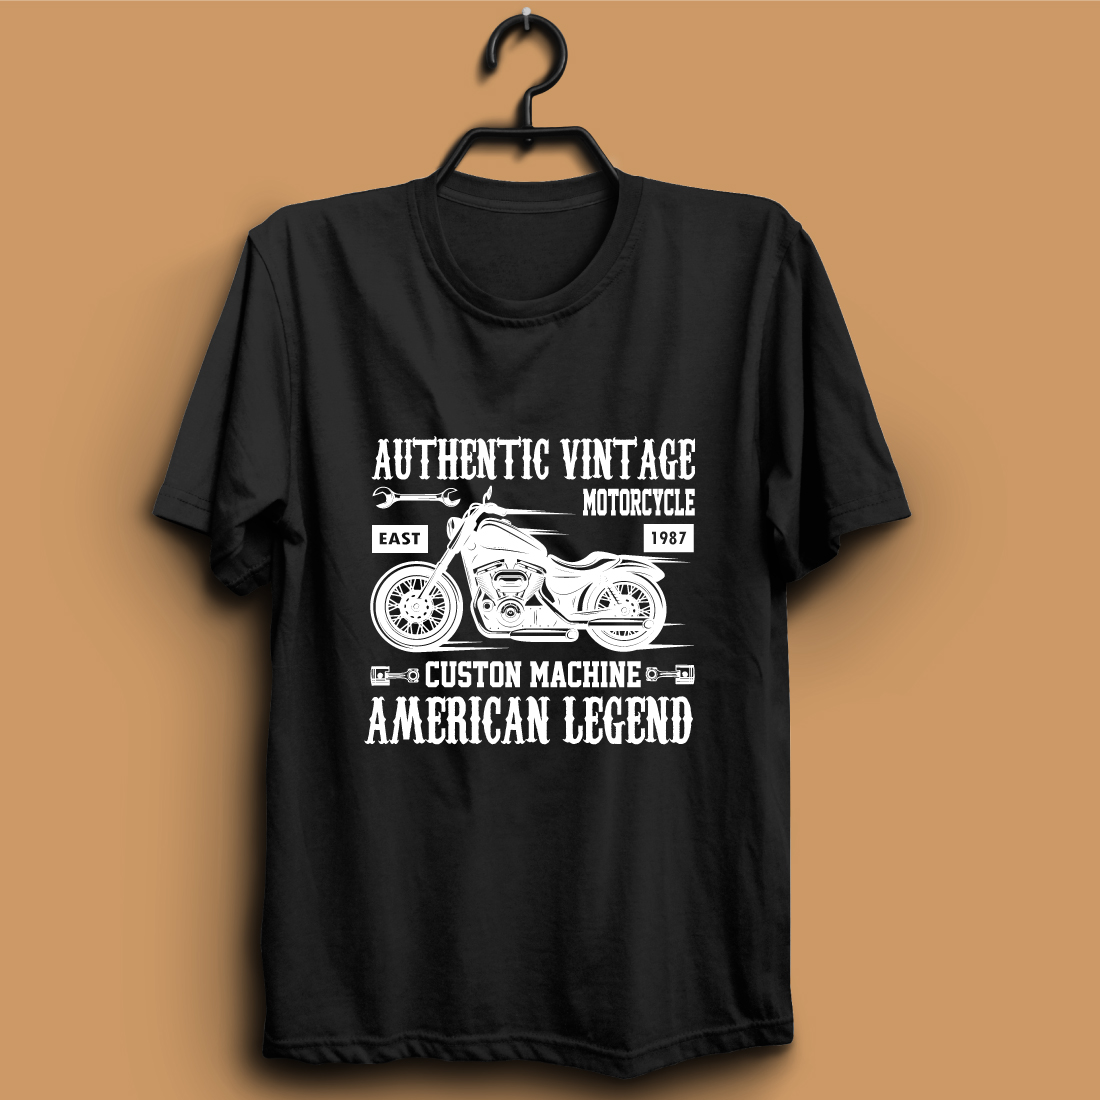 vintage motorcycle t shirt design02 524